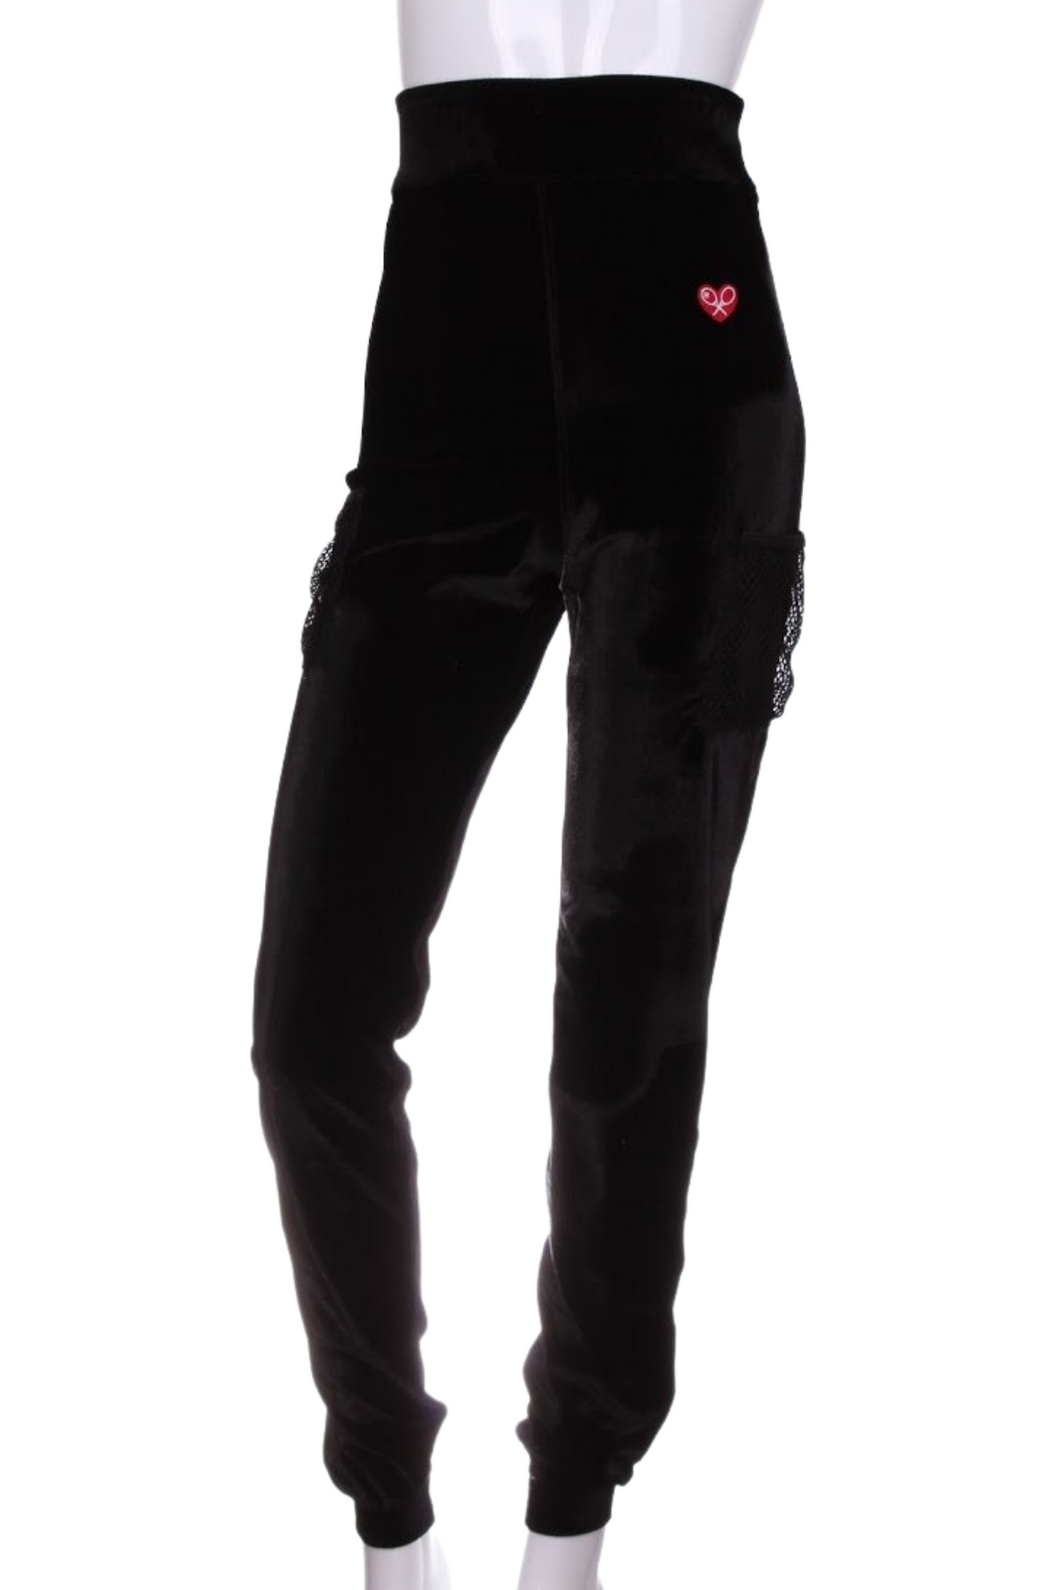 Solid Black Velvet High + Long Warm Up Pants - I LOVE MY DOUBLES PARTNER!!!